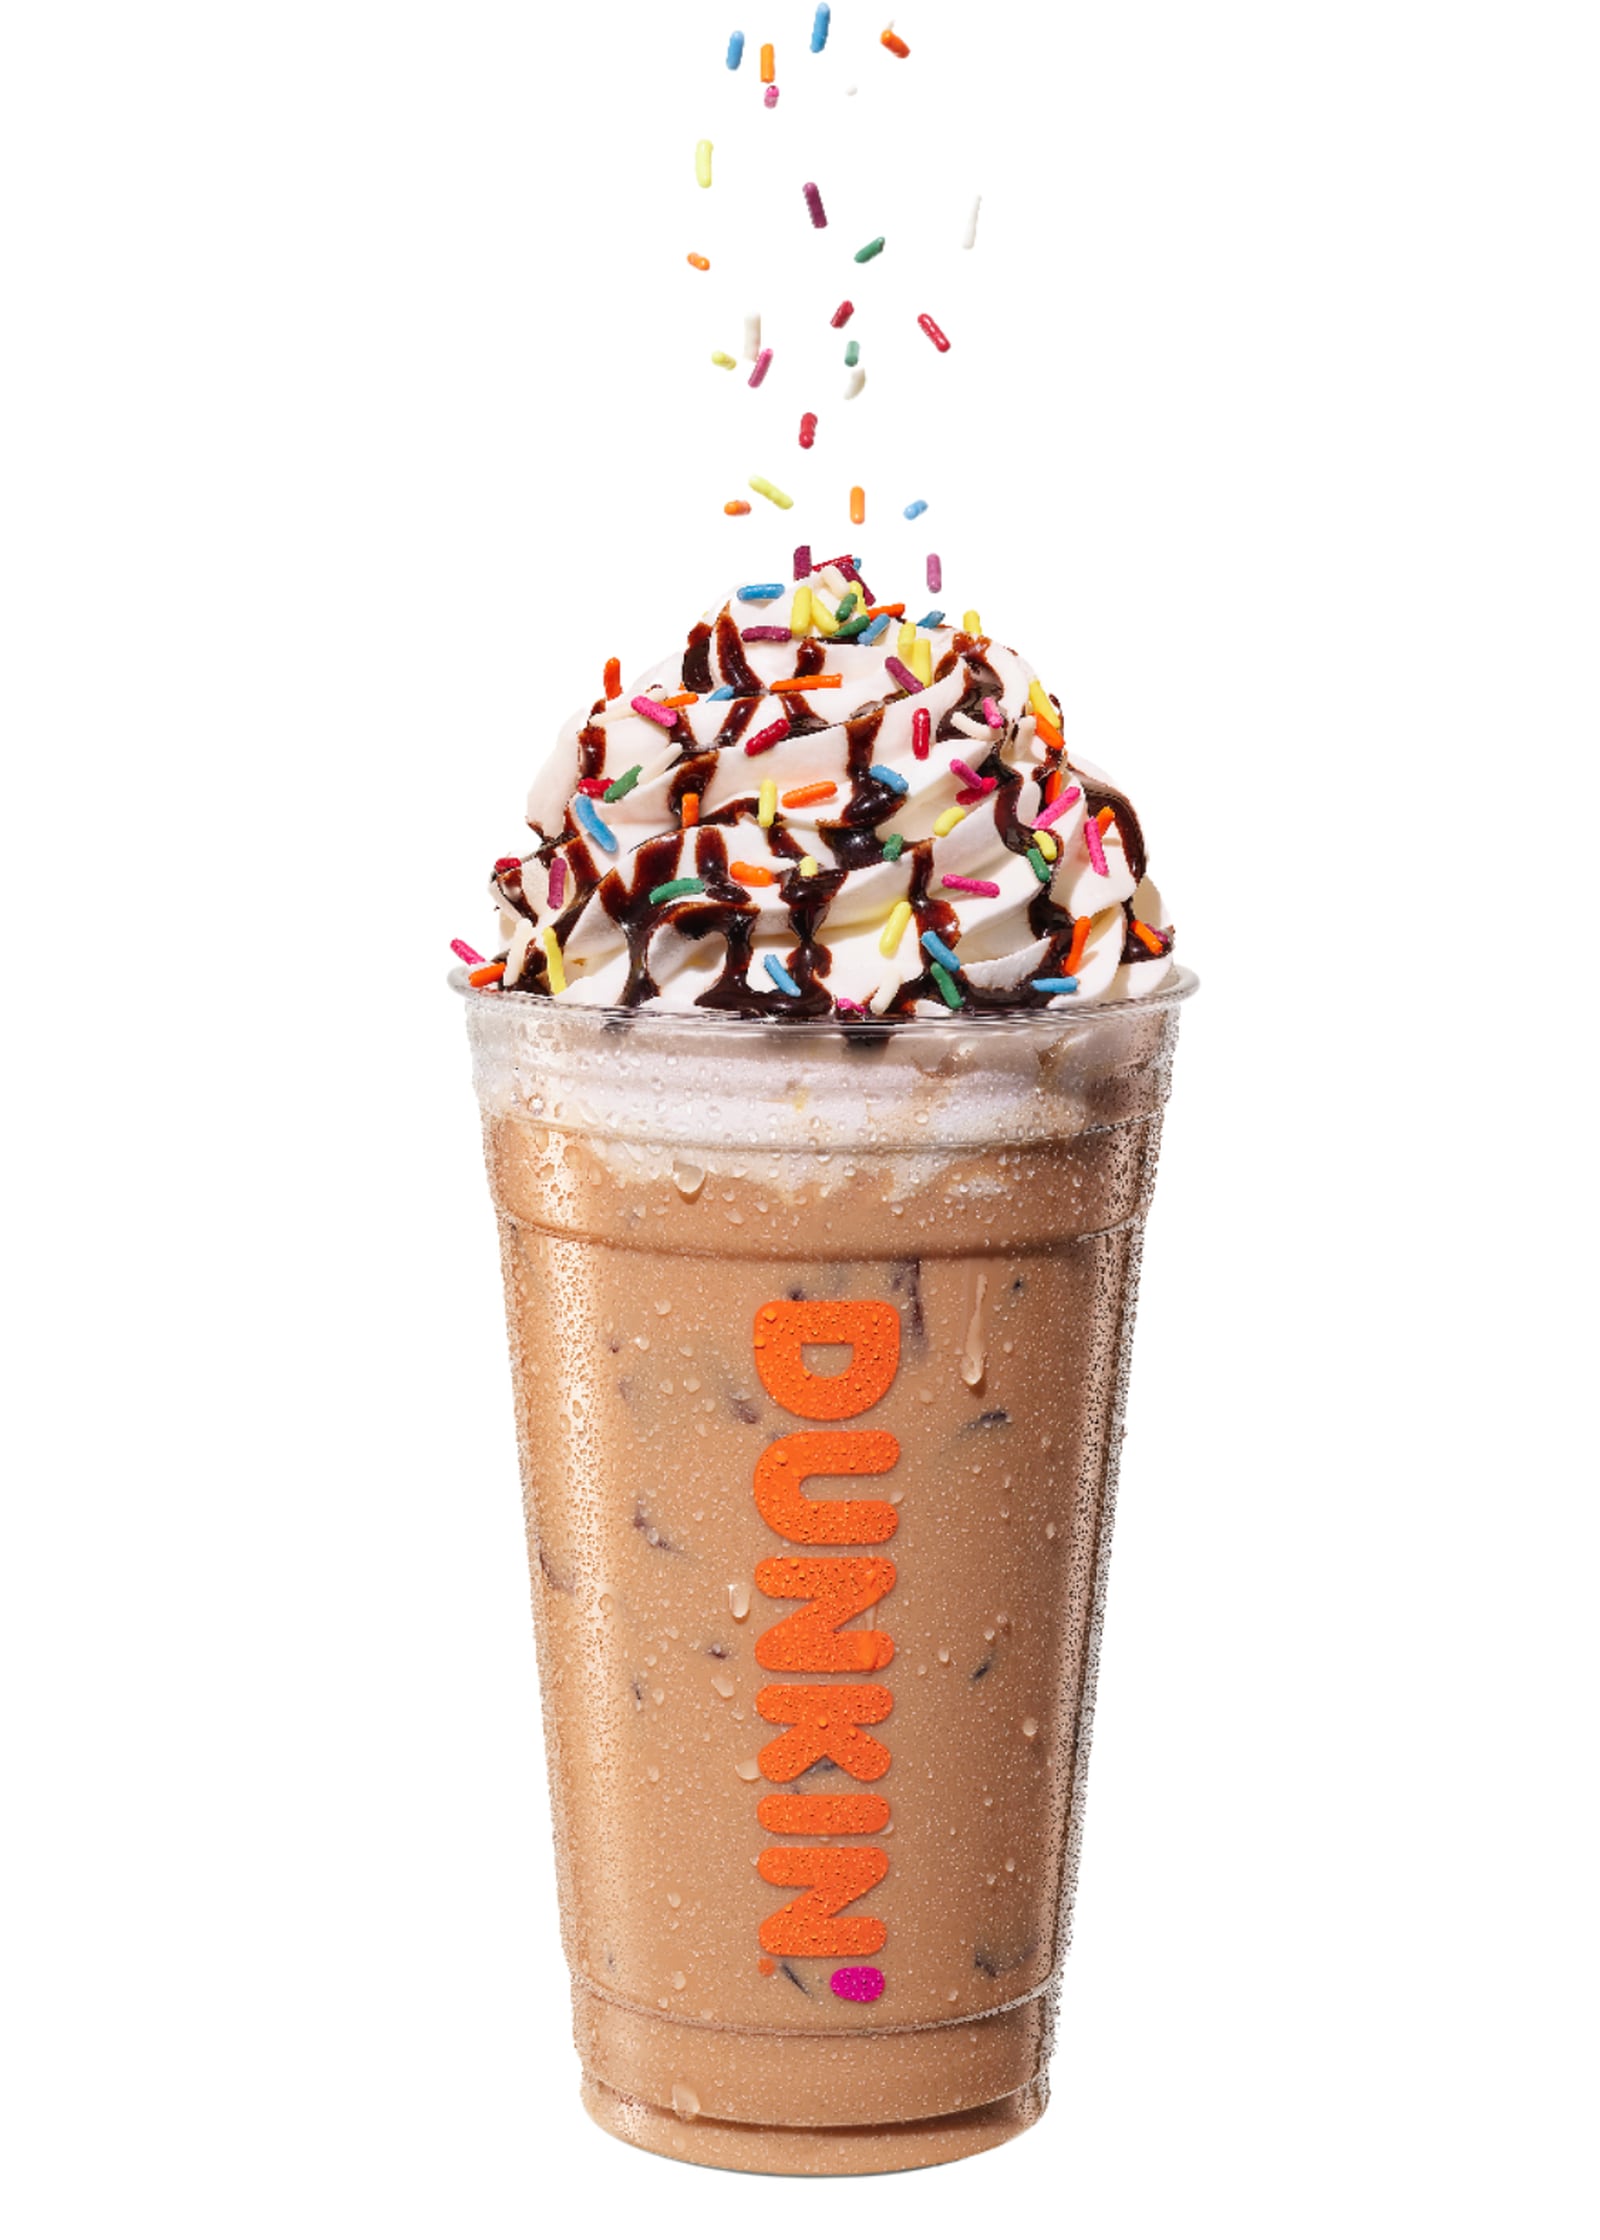 Dunkin’ debuts refreshing new drinks and savory new treats at Orlando